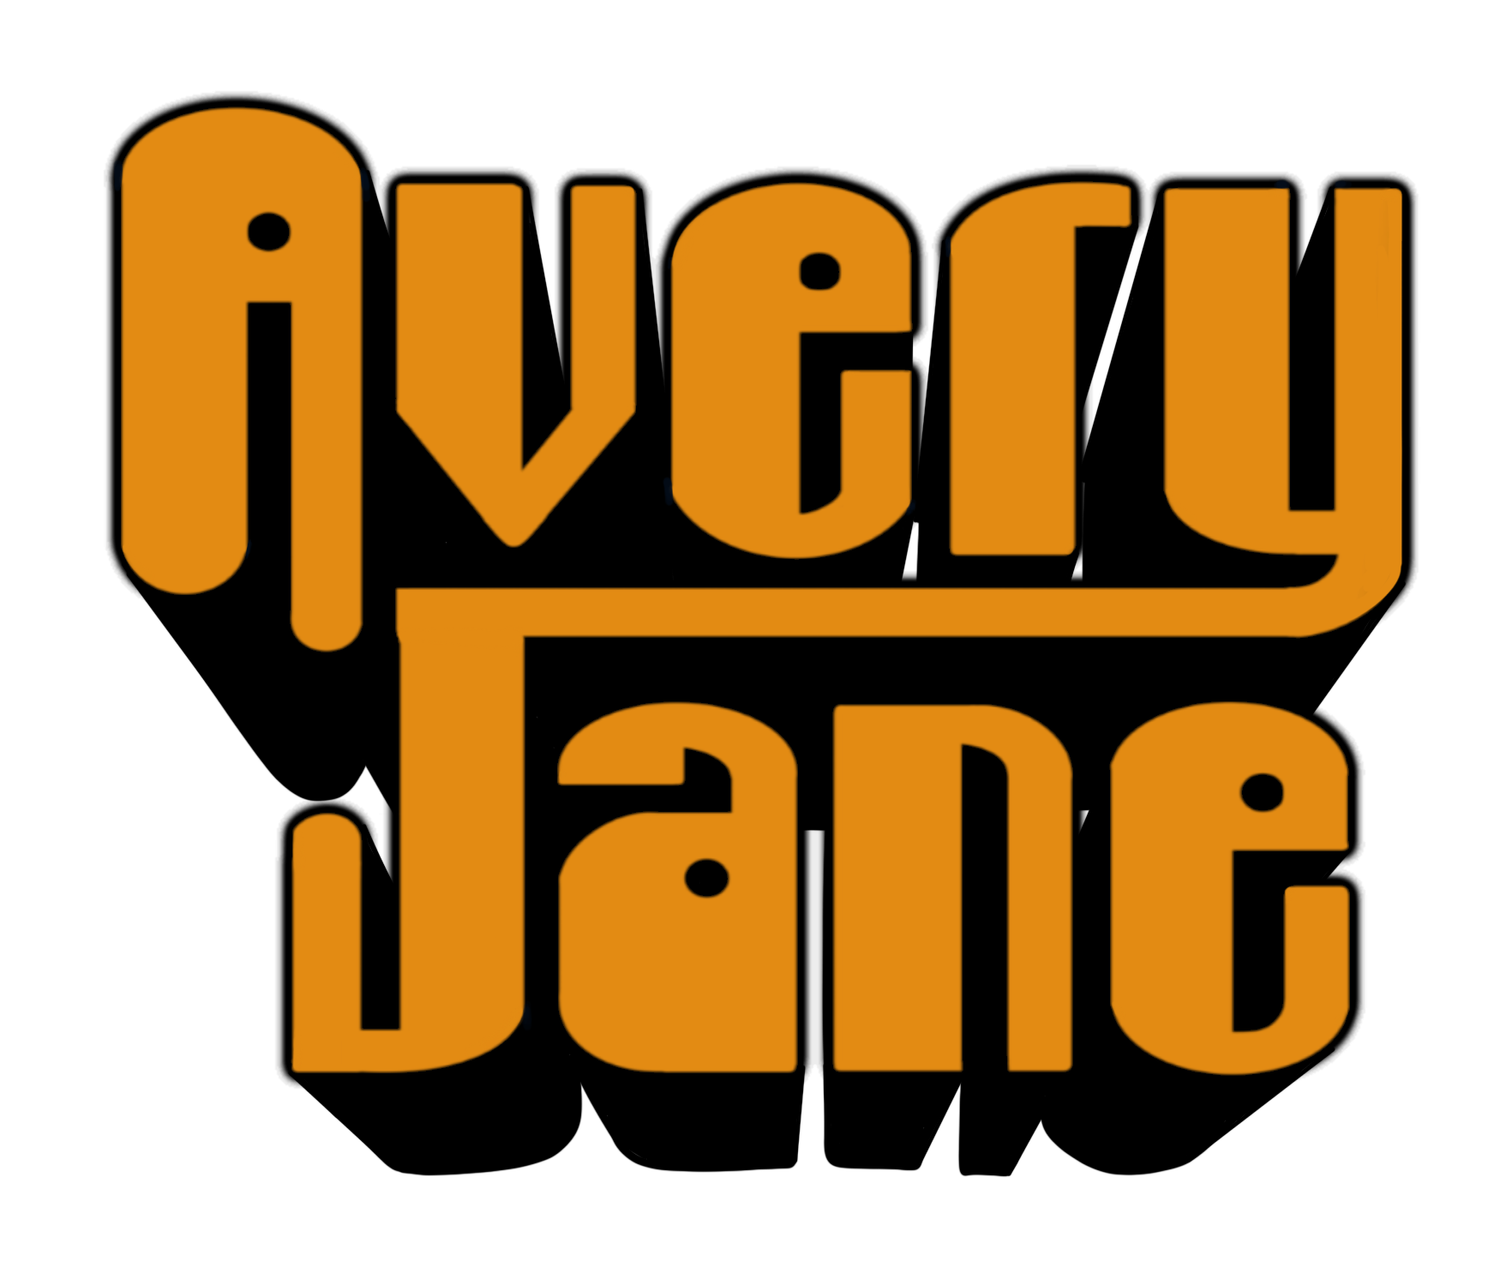 Avery Jane